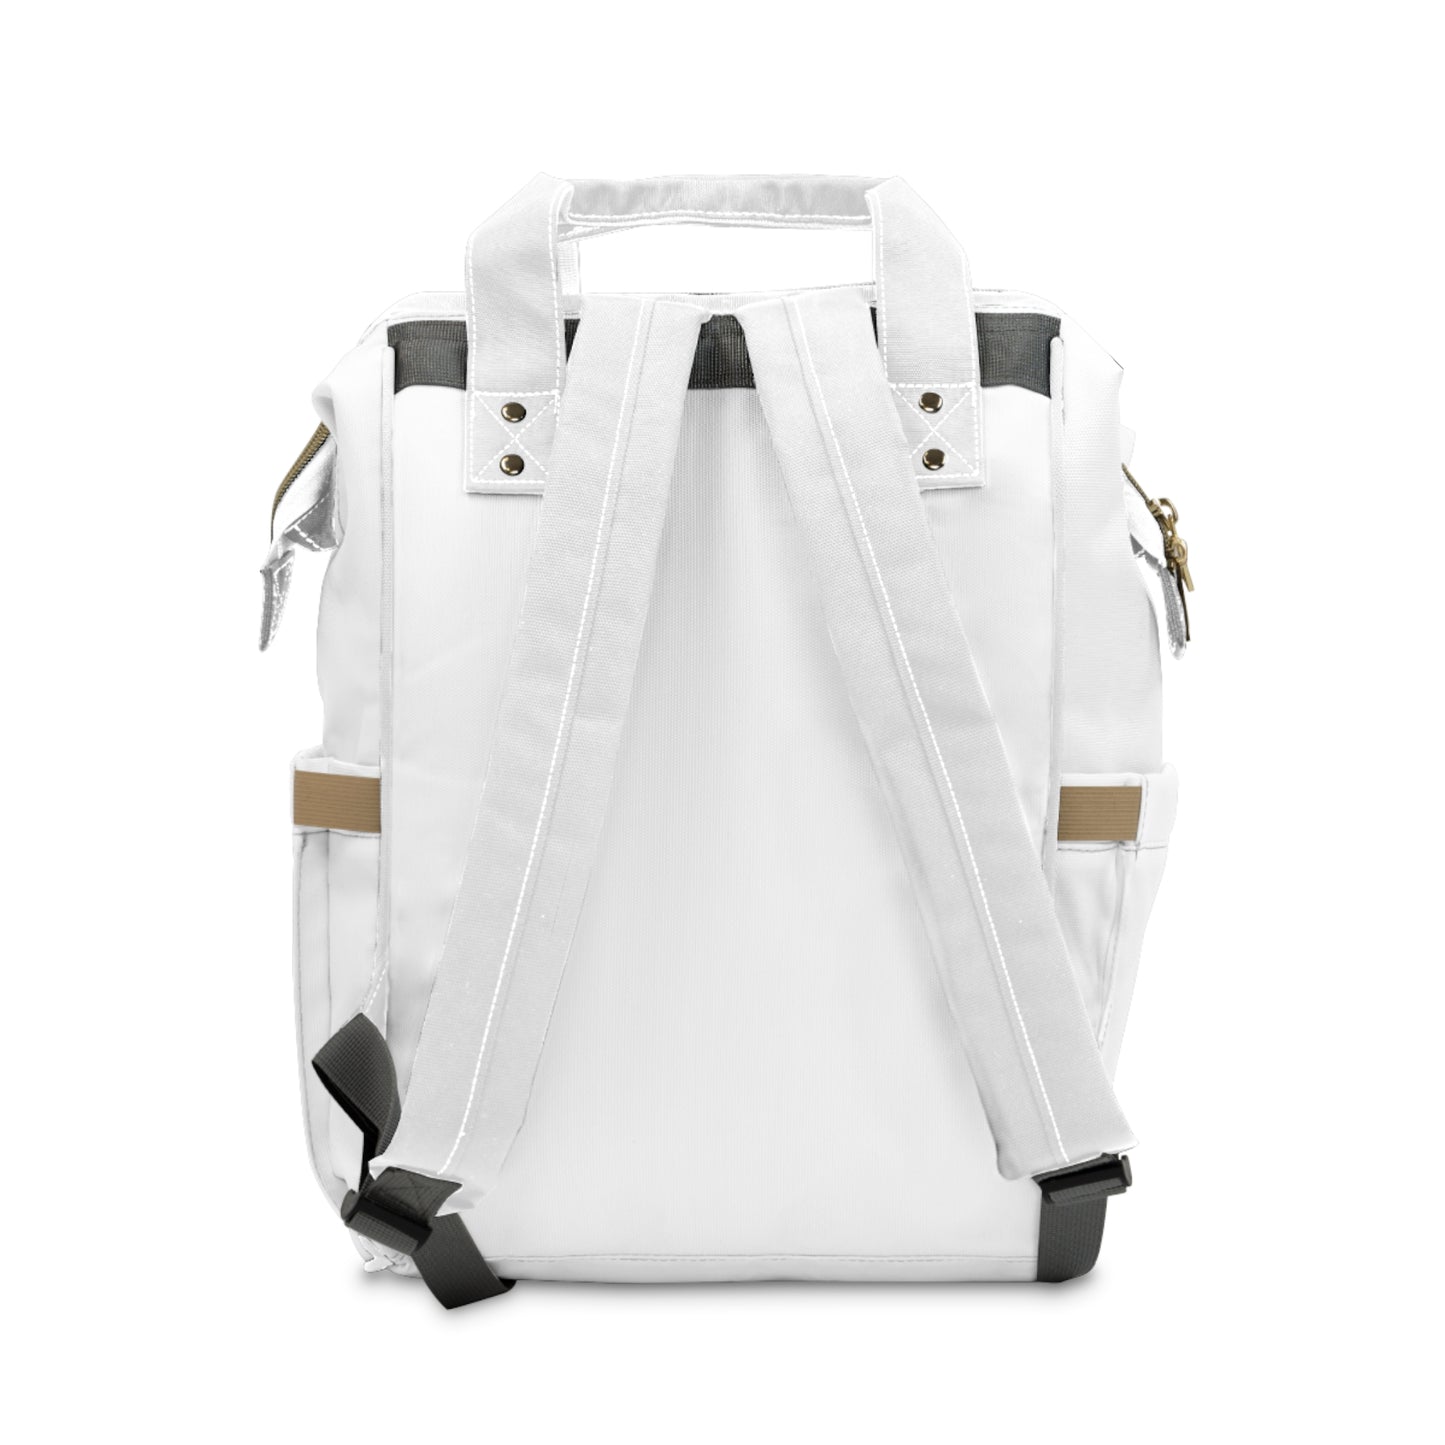 Multifunctional Diaper Backpack Motivational Design